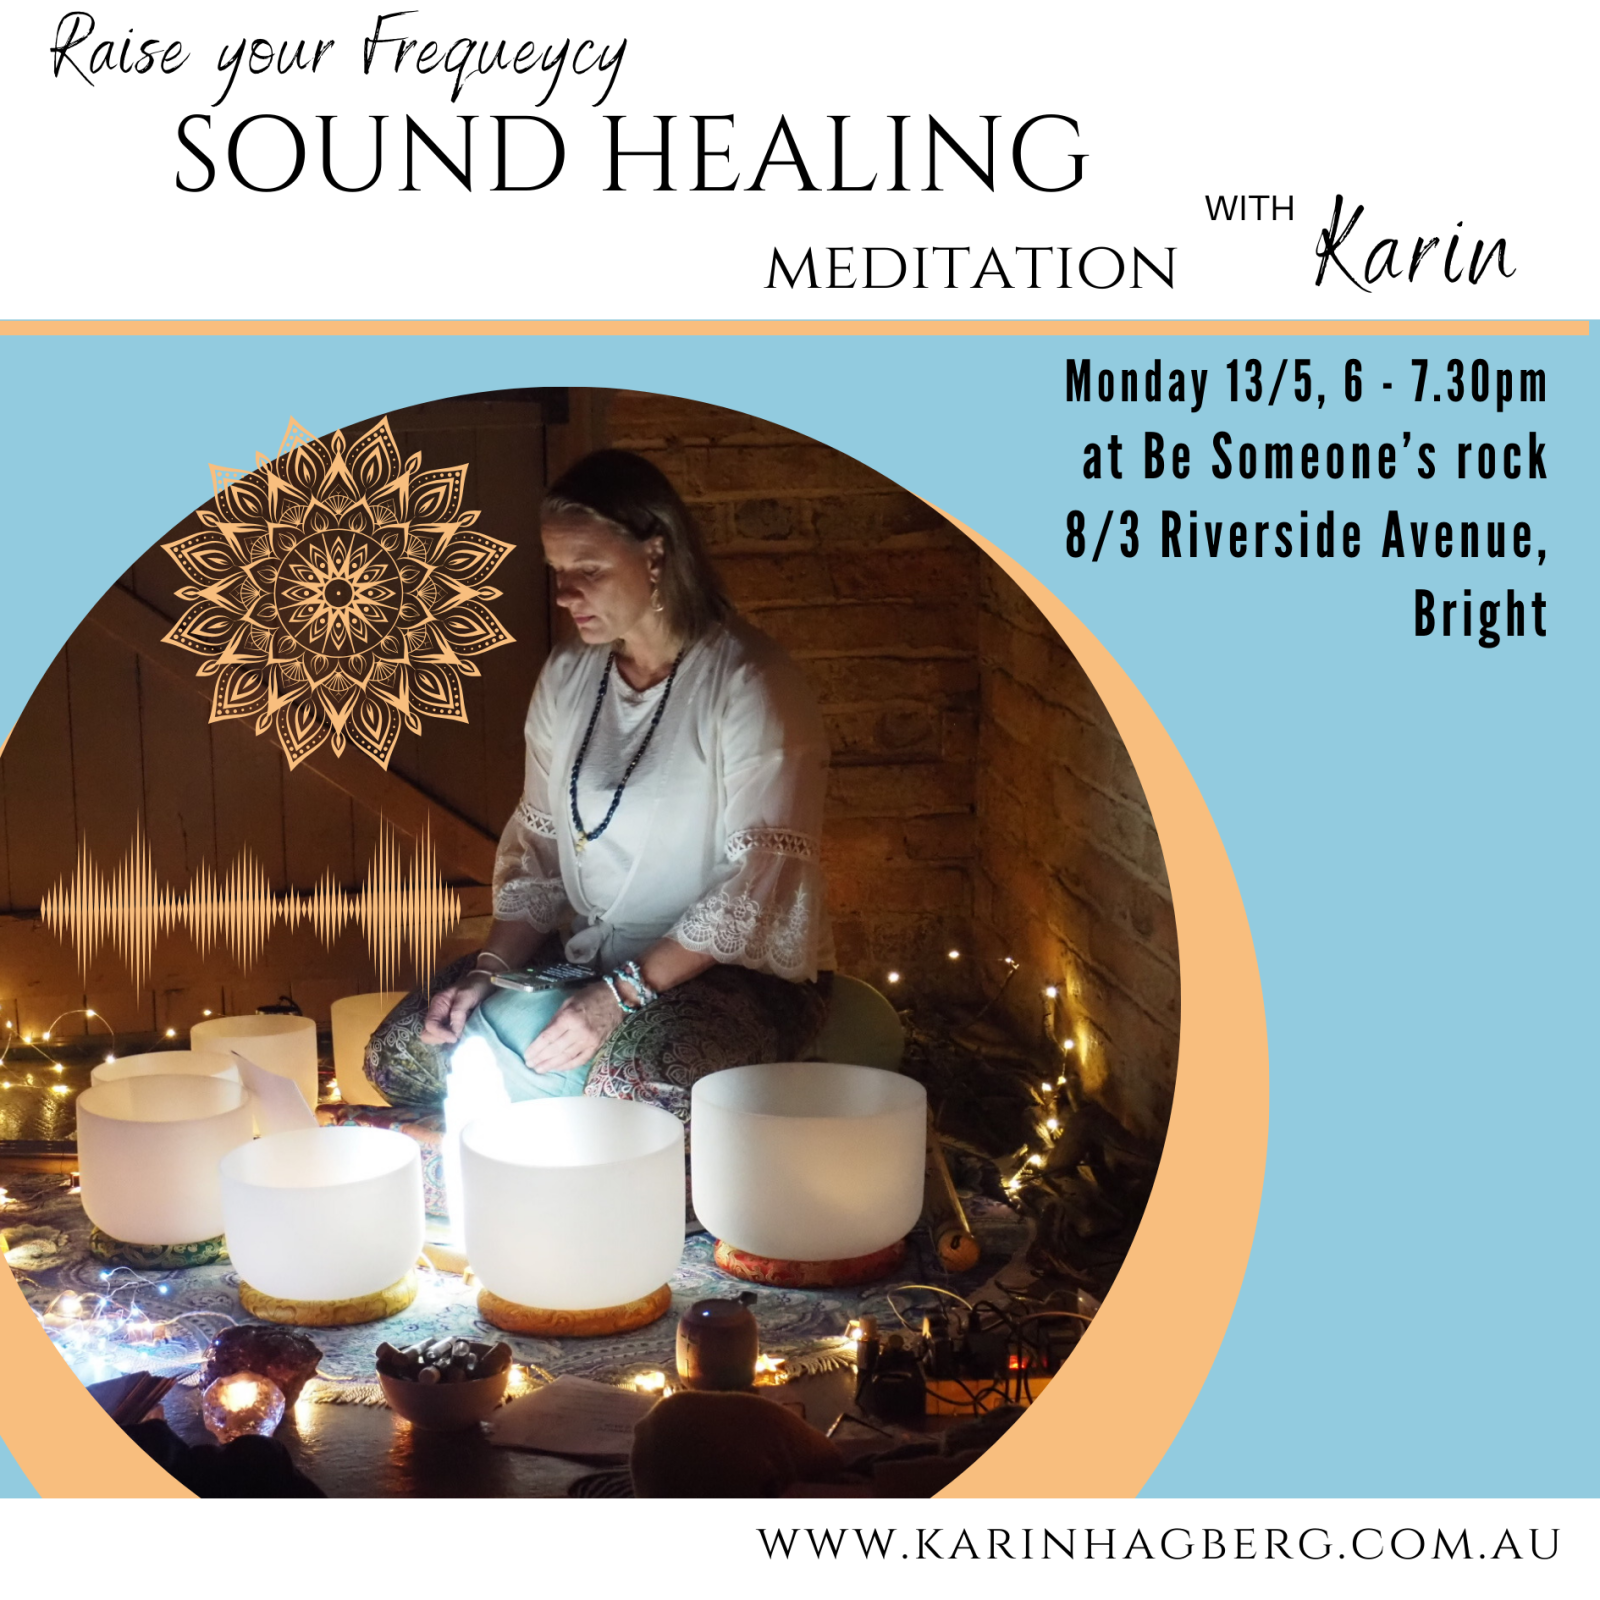 Sound Healing Meditation with Karin